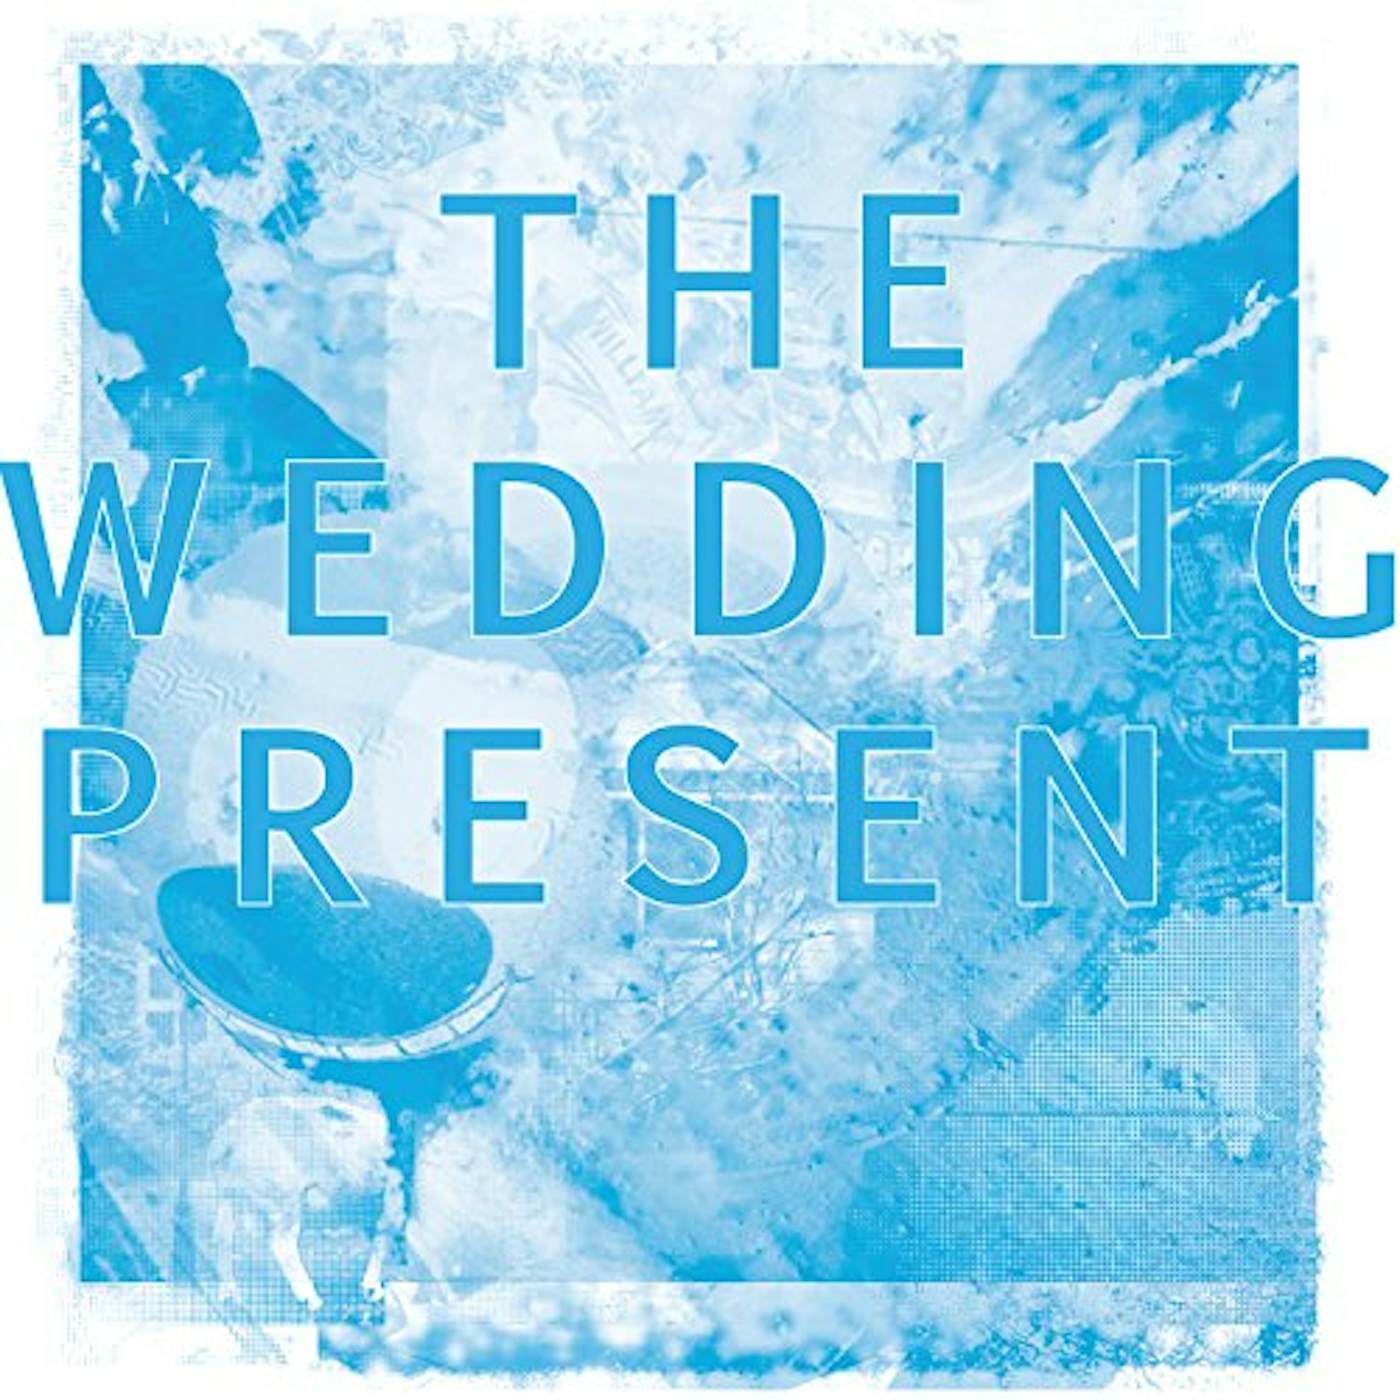 The Wedding Present BACK A BIT STOP Vinyl Record